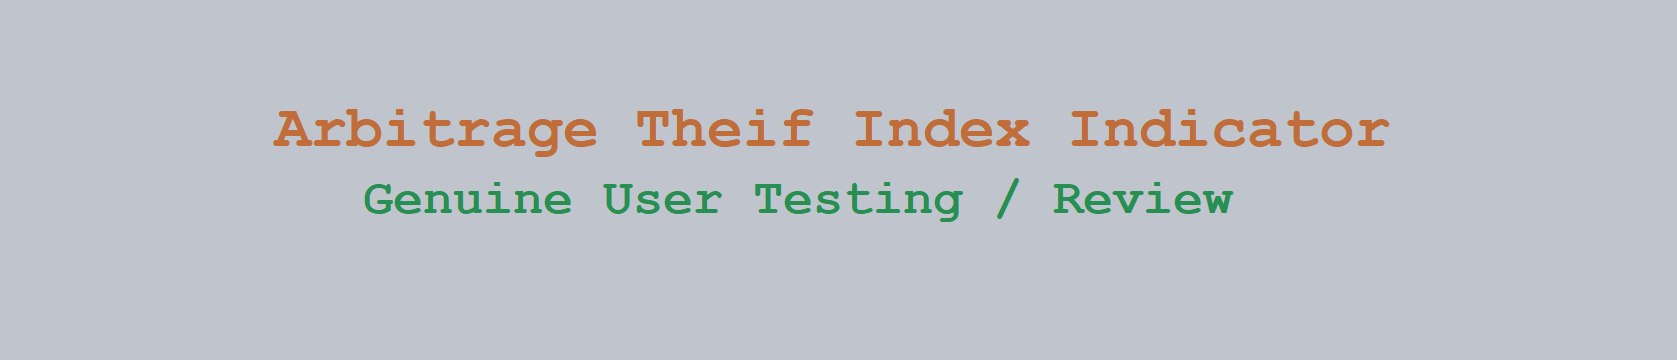 Arbitrage Thief Index Indicator - Peacekeeper86 Testing & review